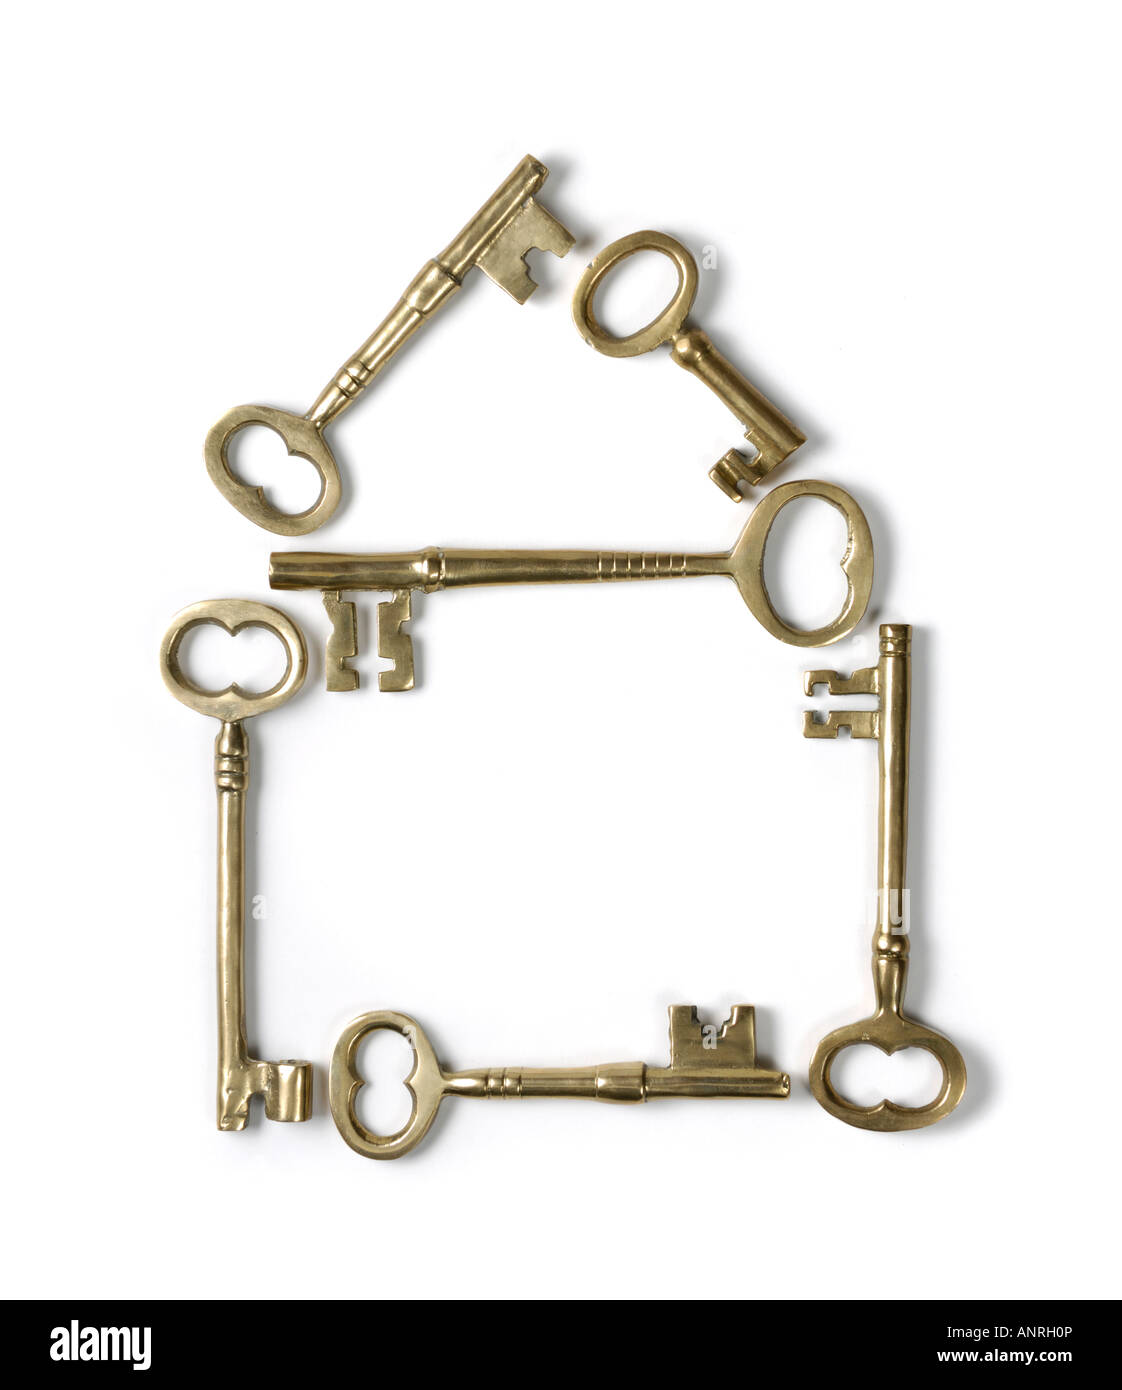 Home symbol made from shiny brass skeleton keys Stock Photo